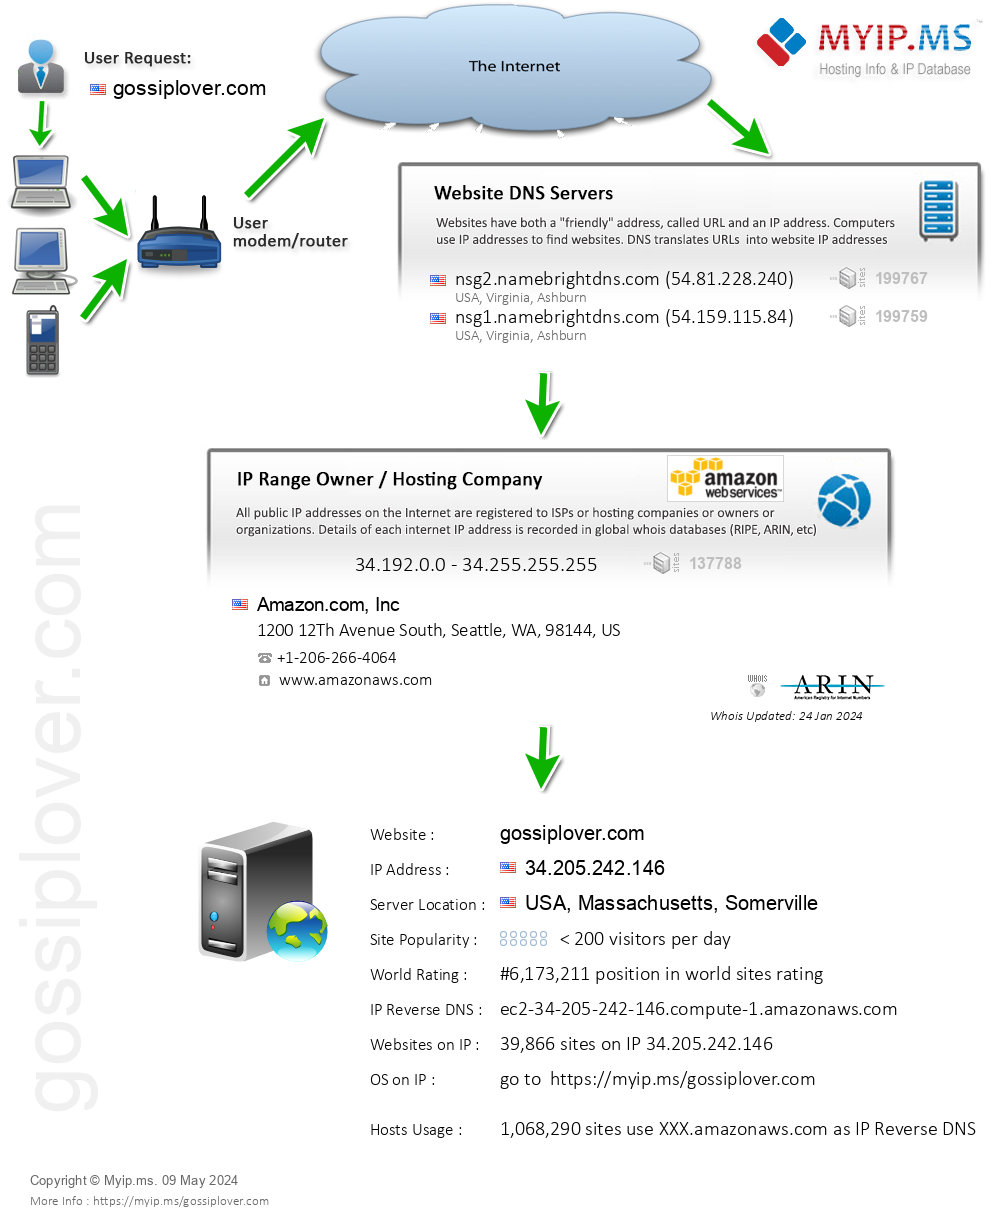 Gossiplover.com - Website Hosting Visual IP Diagram